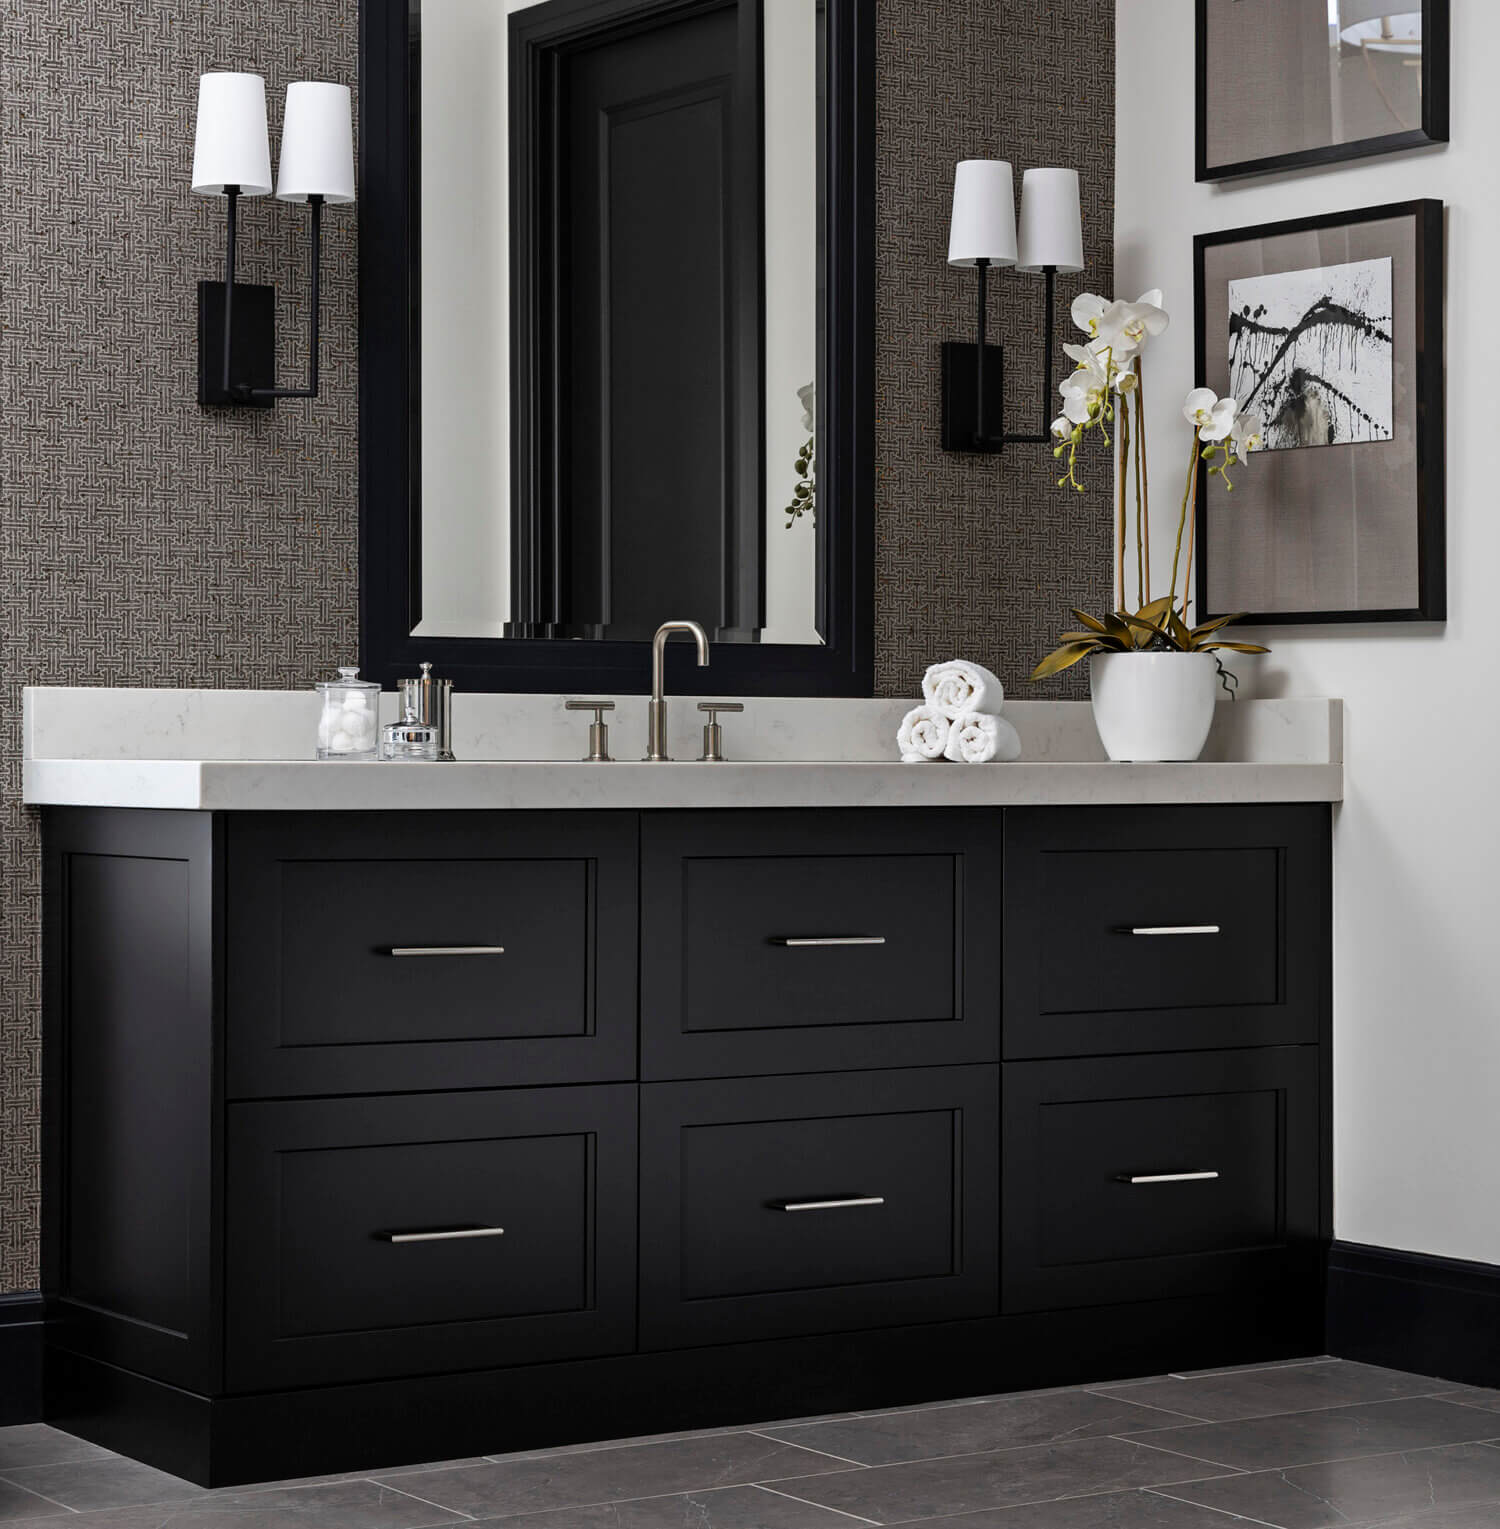 A Black & White master bathroom design with a black painted bathroom vanity.